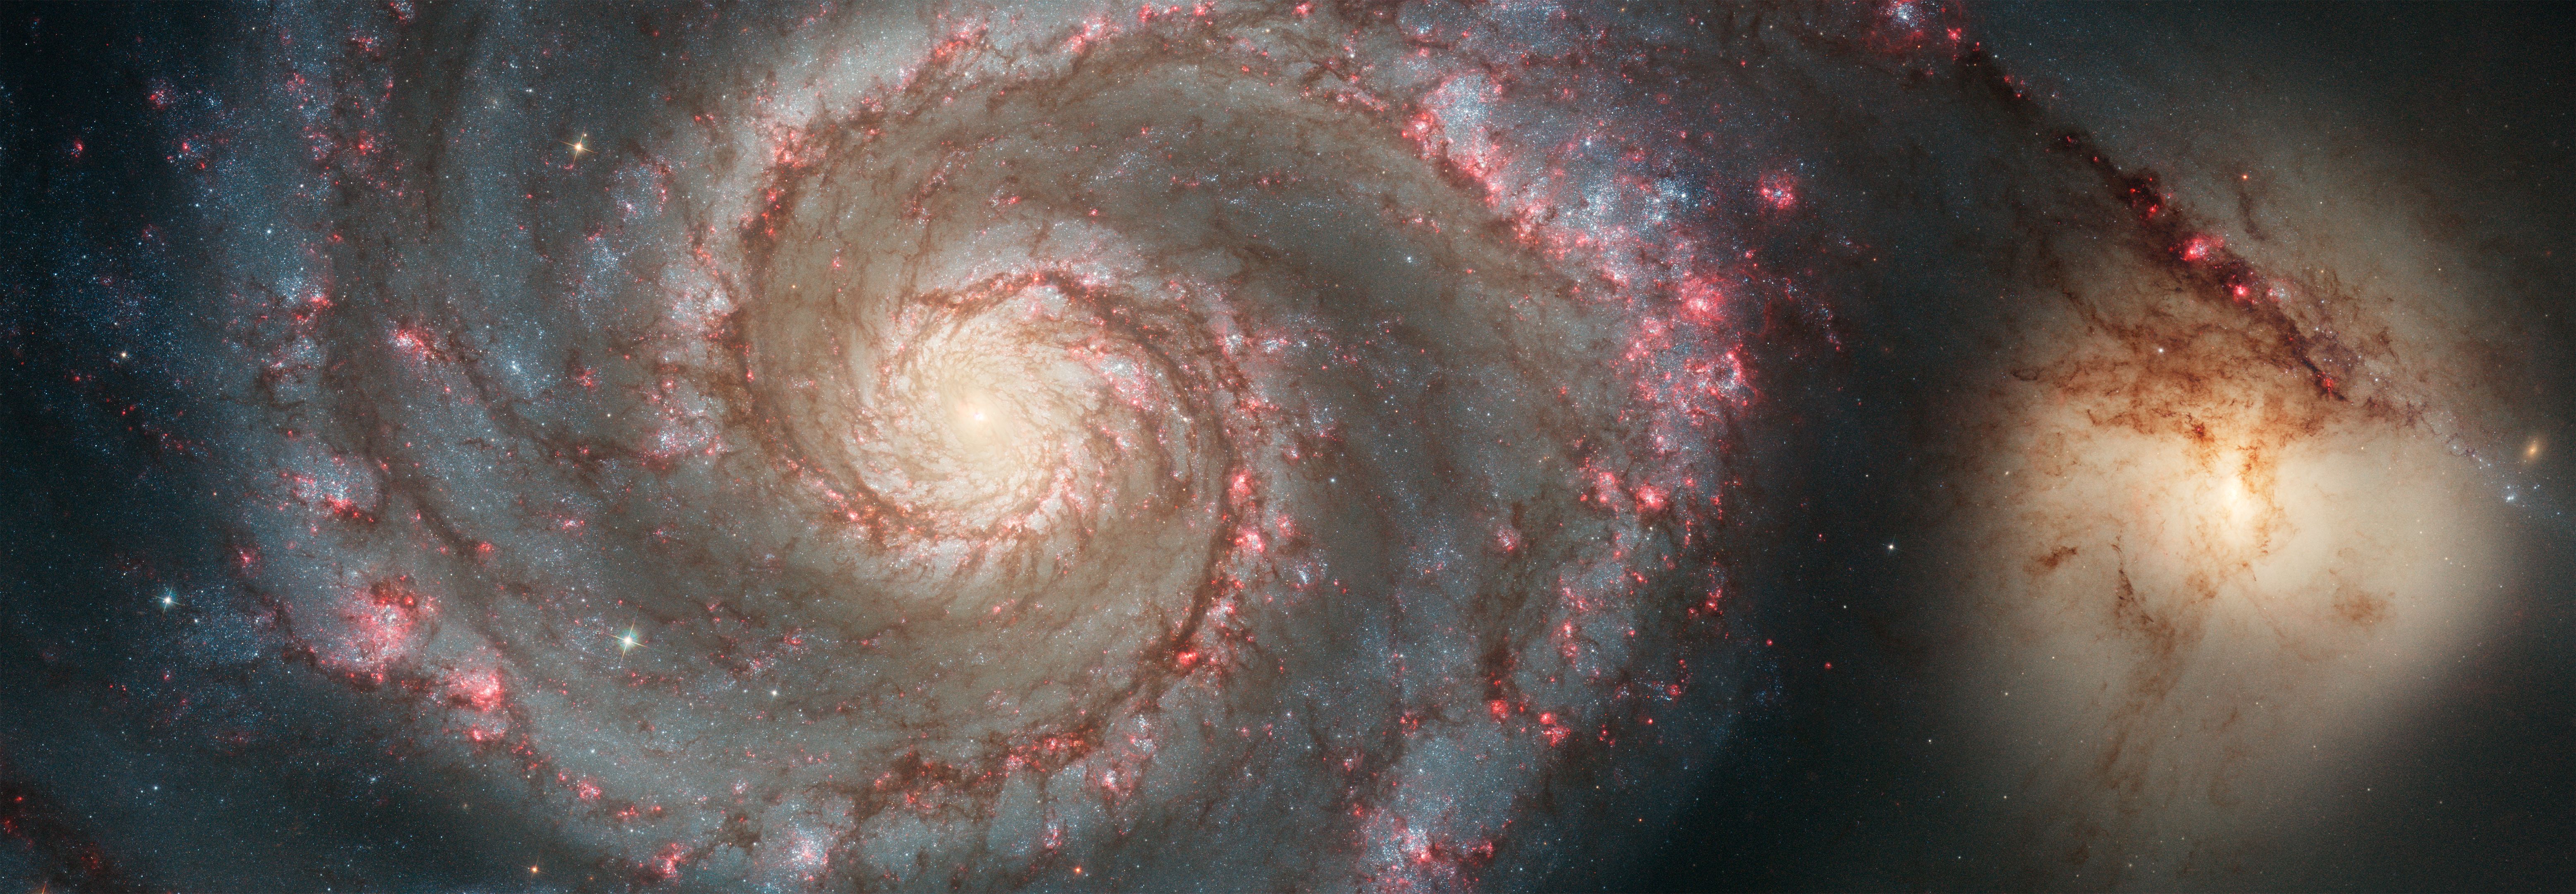 M the Whirlpool Galaxy [6225 x 2160]